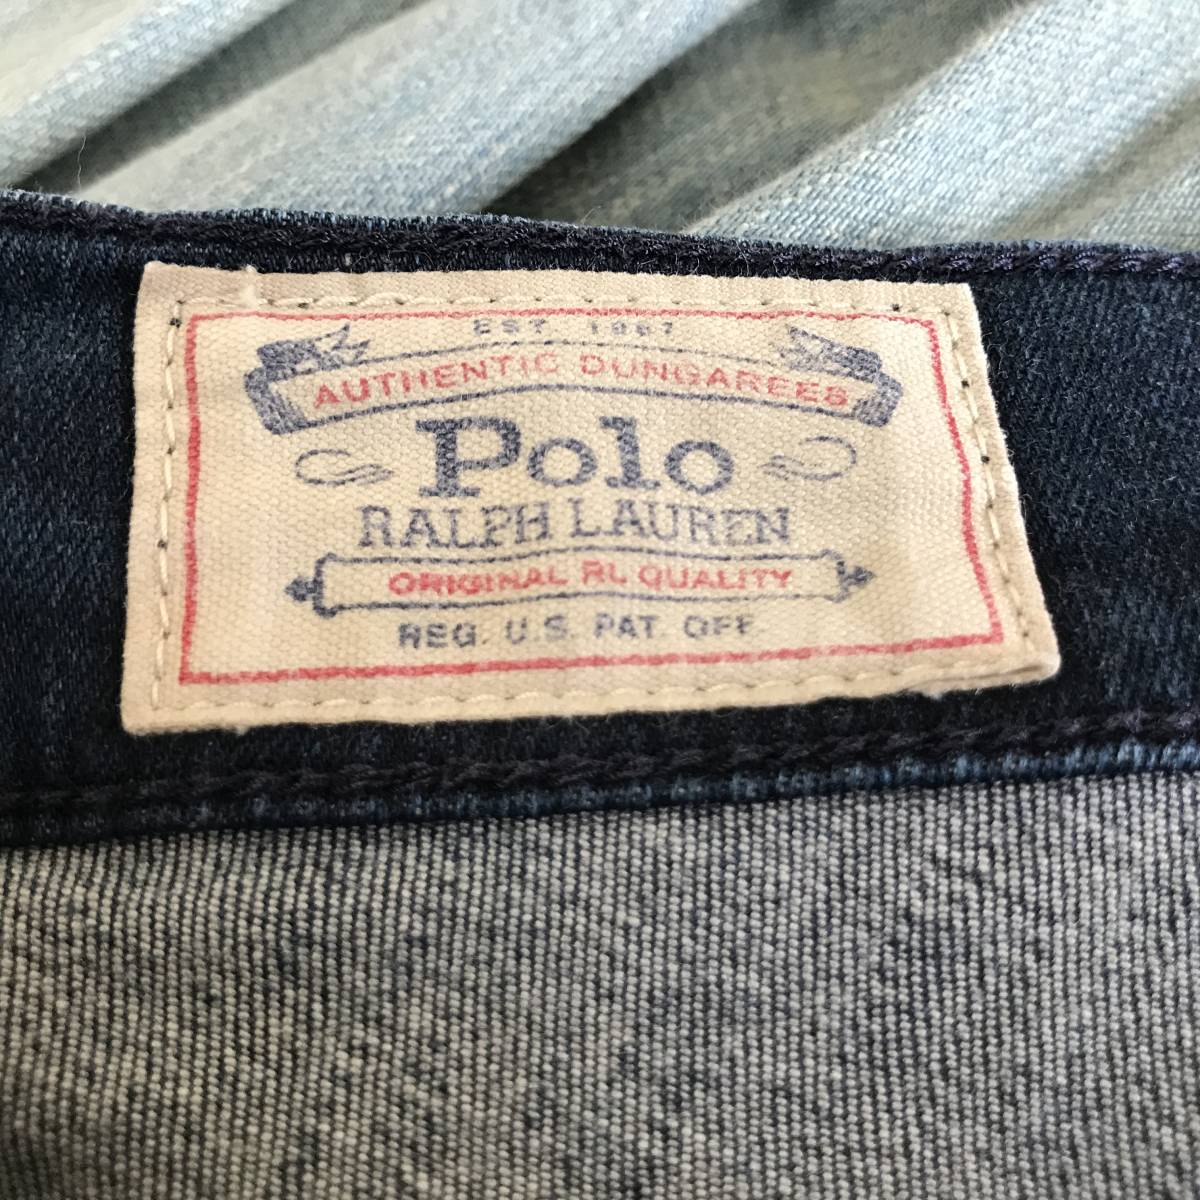 RALPH LAUREN VARICK LEGGINGS Polo Ralph Lauren lady's super stretch skinny jeans superior article size 26 160/66A